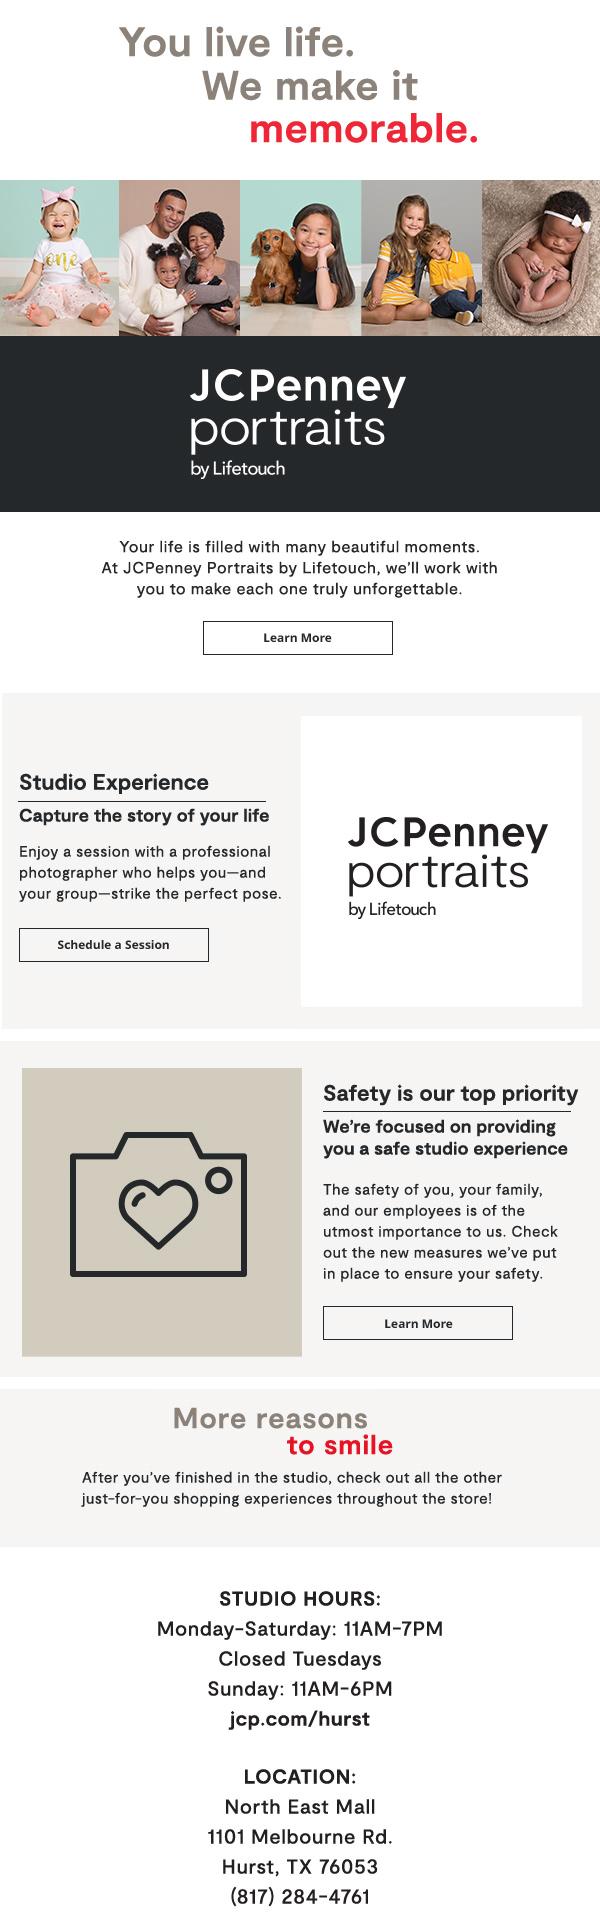 JCP Portraits Office Photos